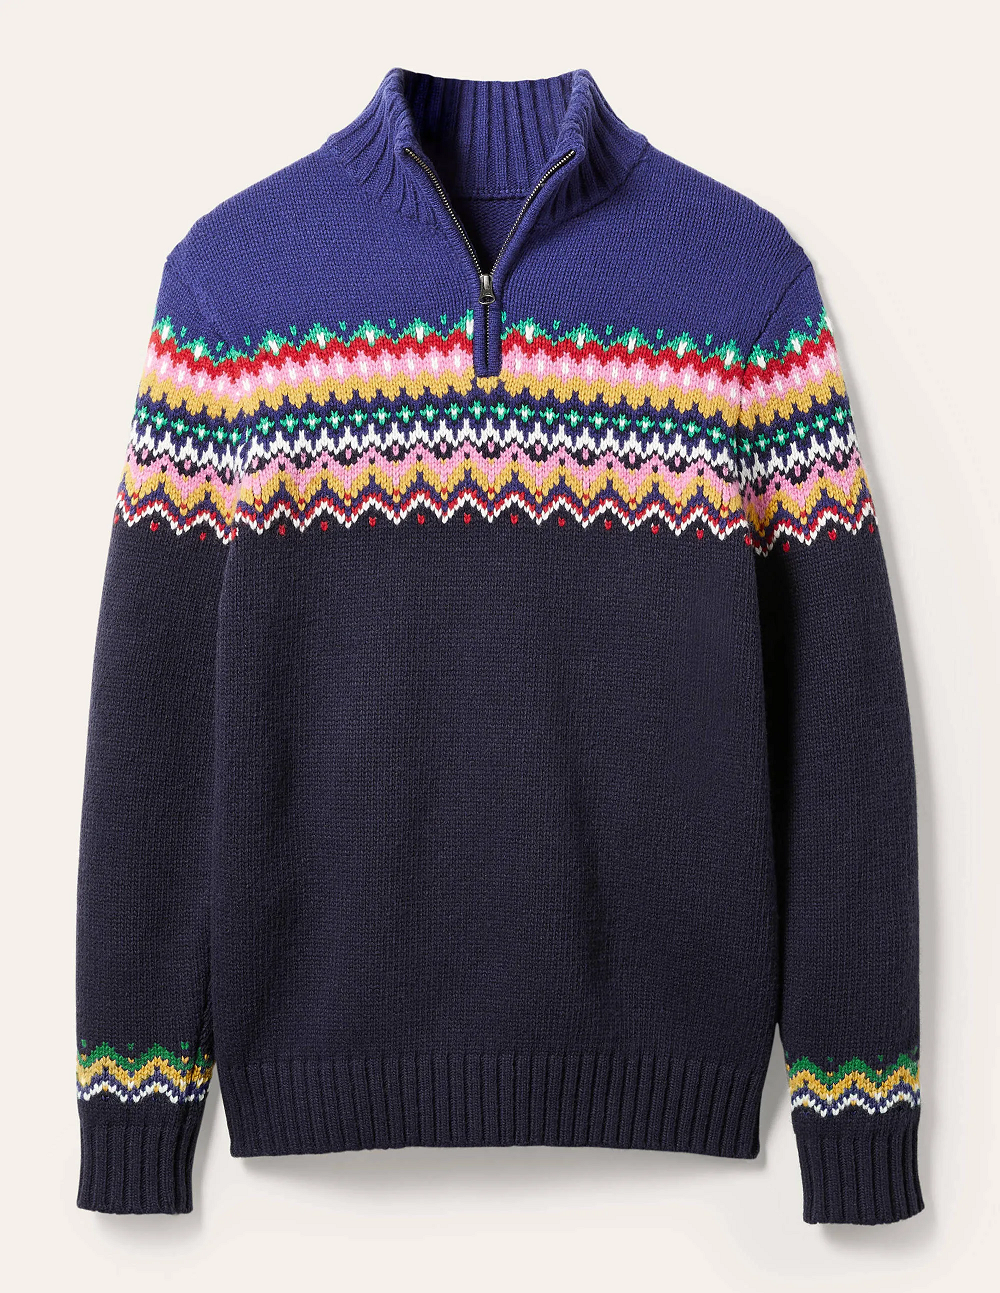 Ugly Christmas Sweaters Boden božićni puloveri Božić 2020. 